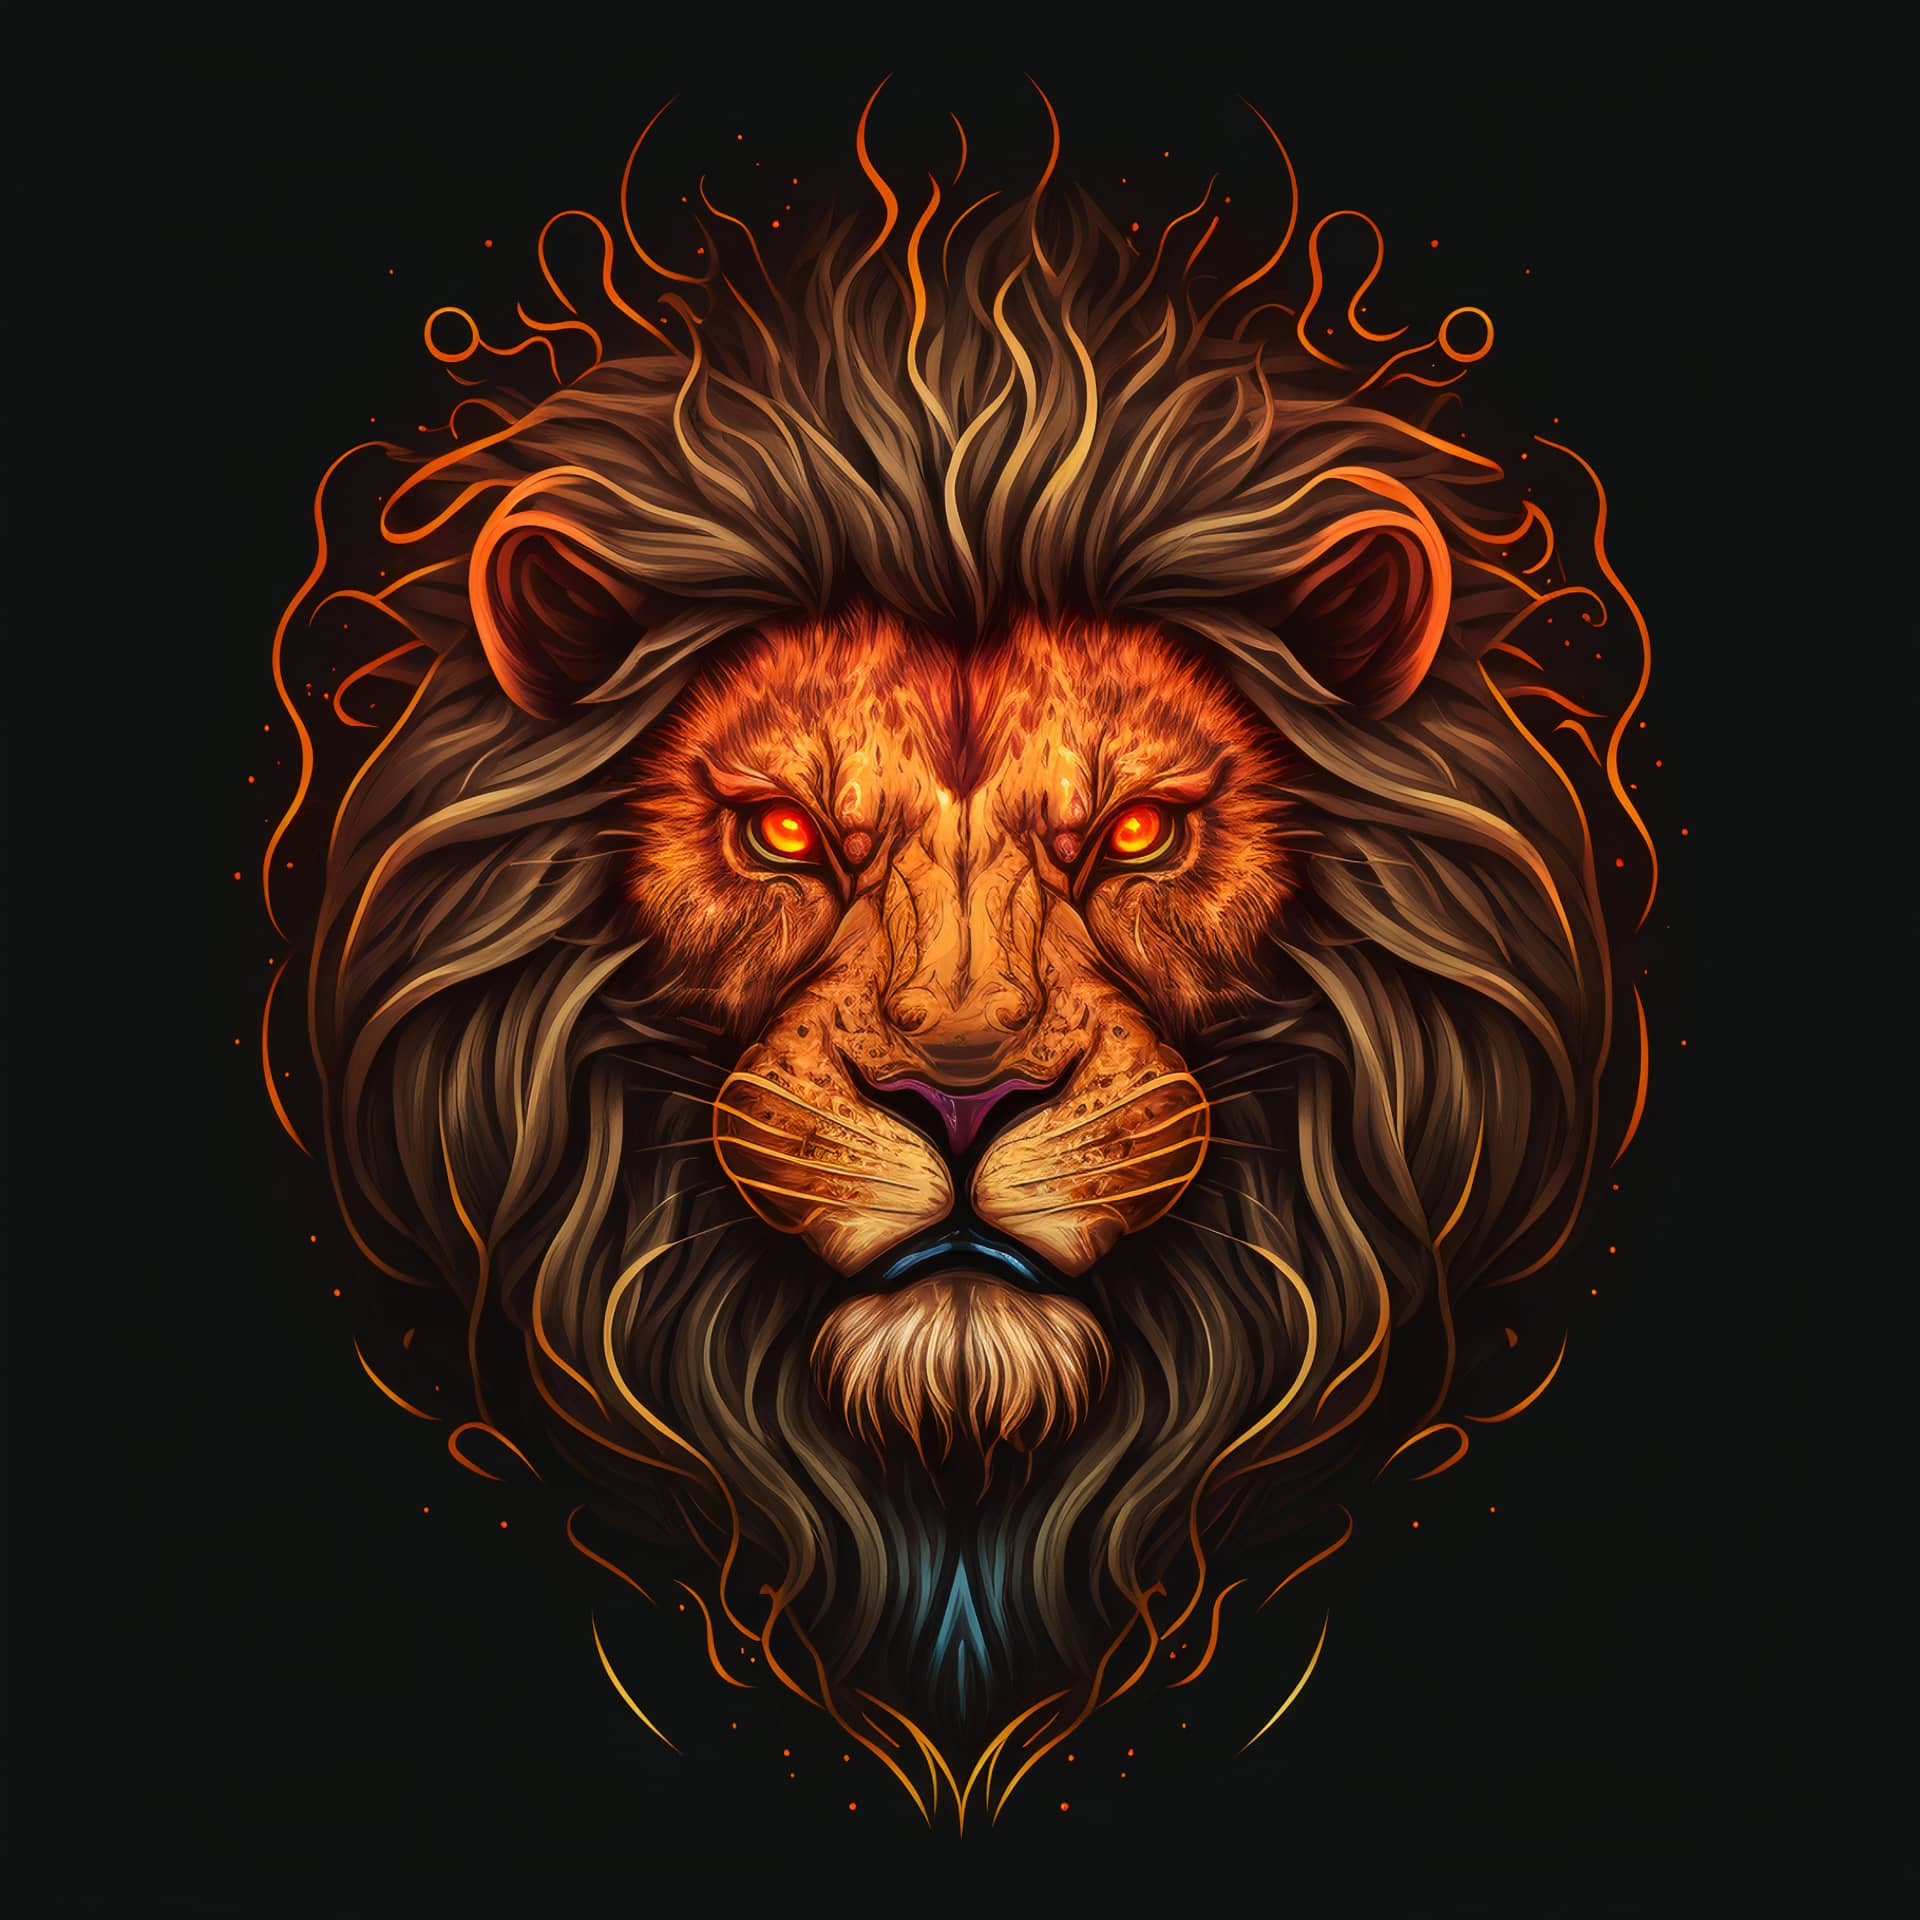 Illustration front view lion head surprisingly perfect design